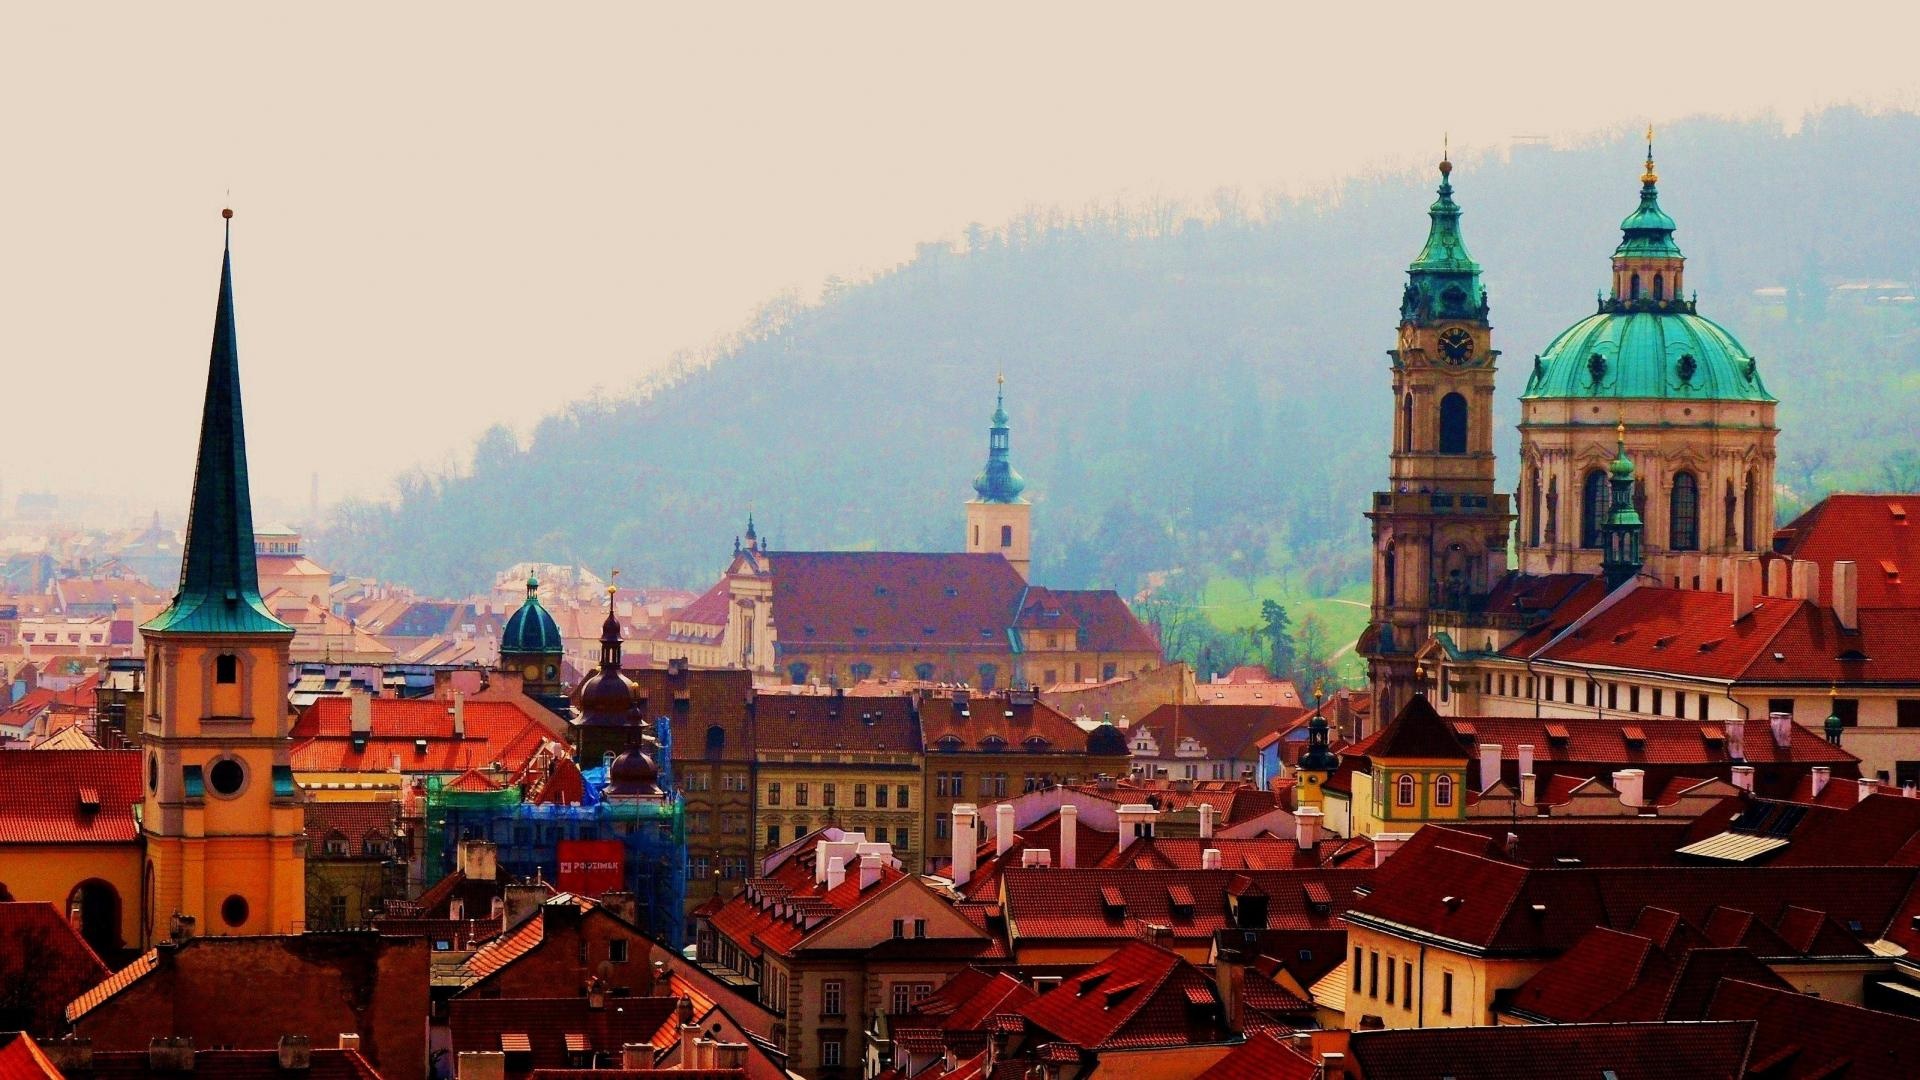 Czechia (Czech Republic): Prague, Romanesque buildings, Rotundas, Basilica. 1920x1080 Full HD Wallpaper.